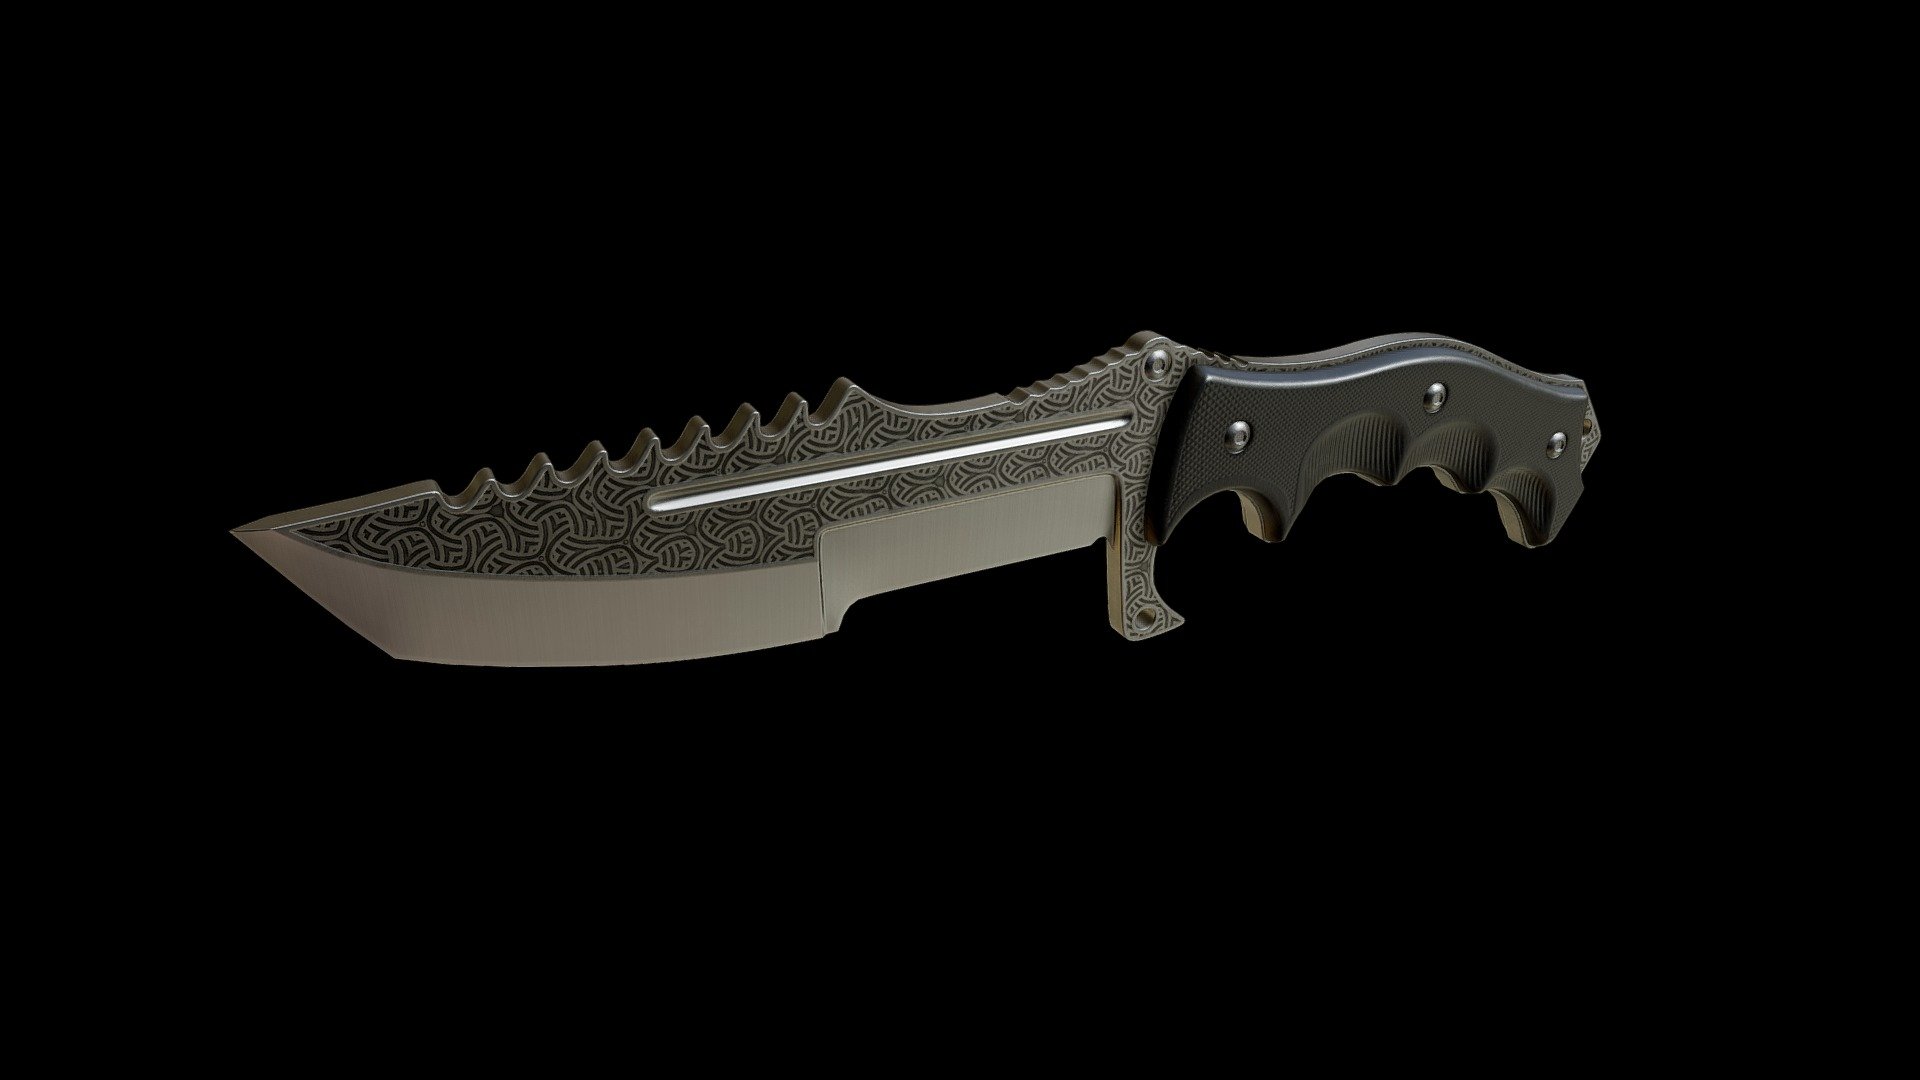 Knife - 3D model by ckatuh [3dcdbbe] - Sketchfab